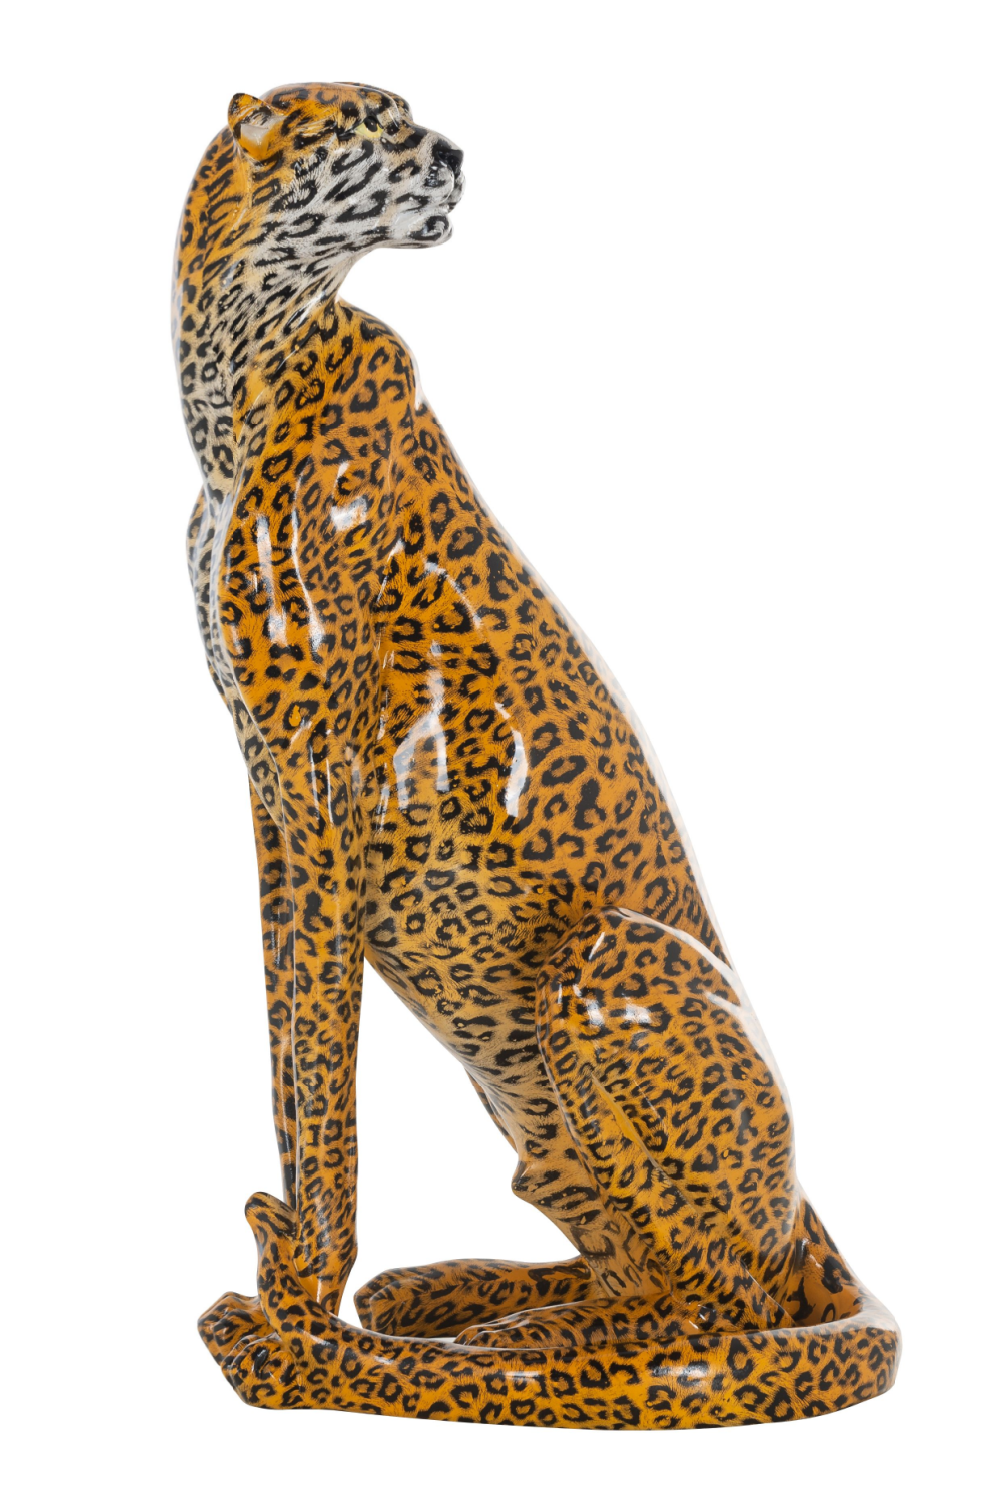 Sculptural Deco Object | OROA Cheetah Tahnee | Oroa.com